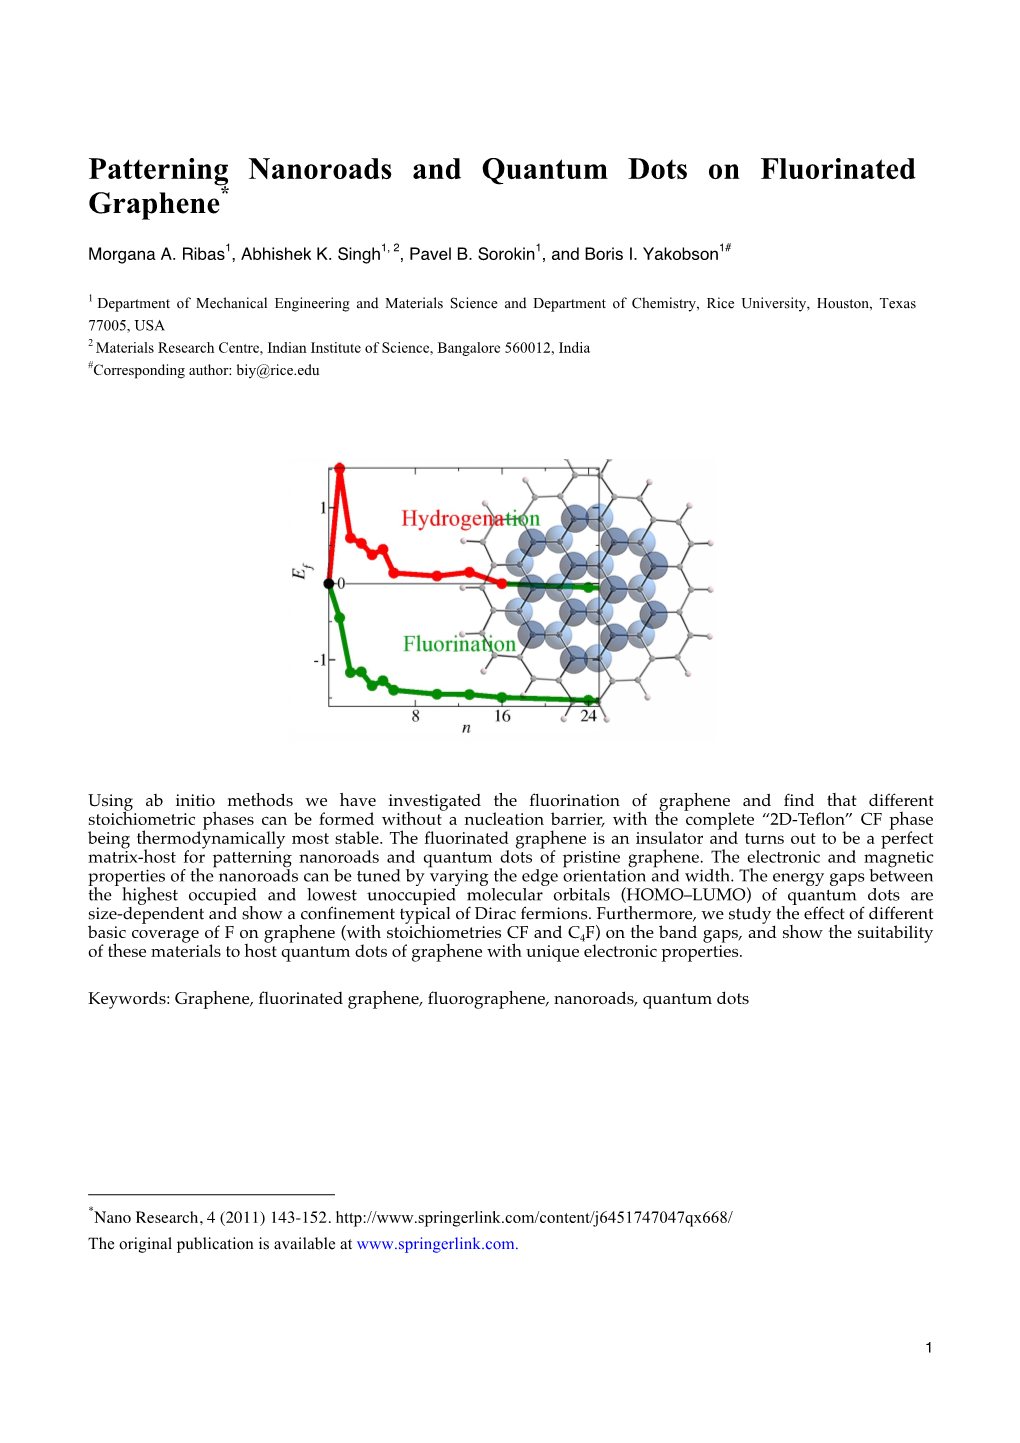 Patterning Nanoroads and Quantum Dots on Fluorinated Graphene*